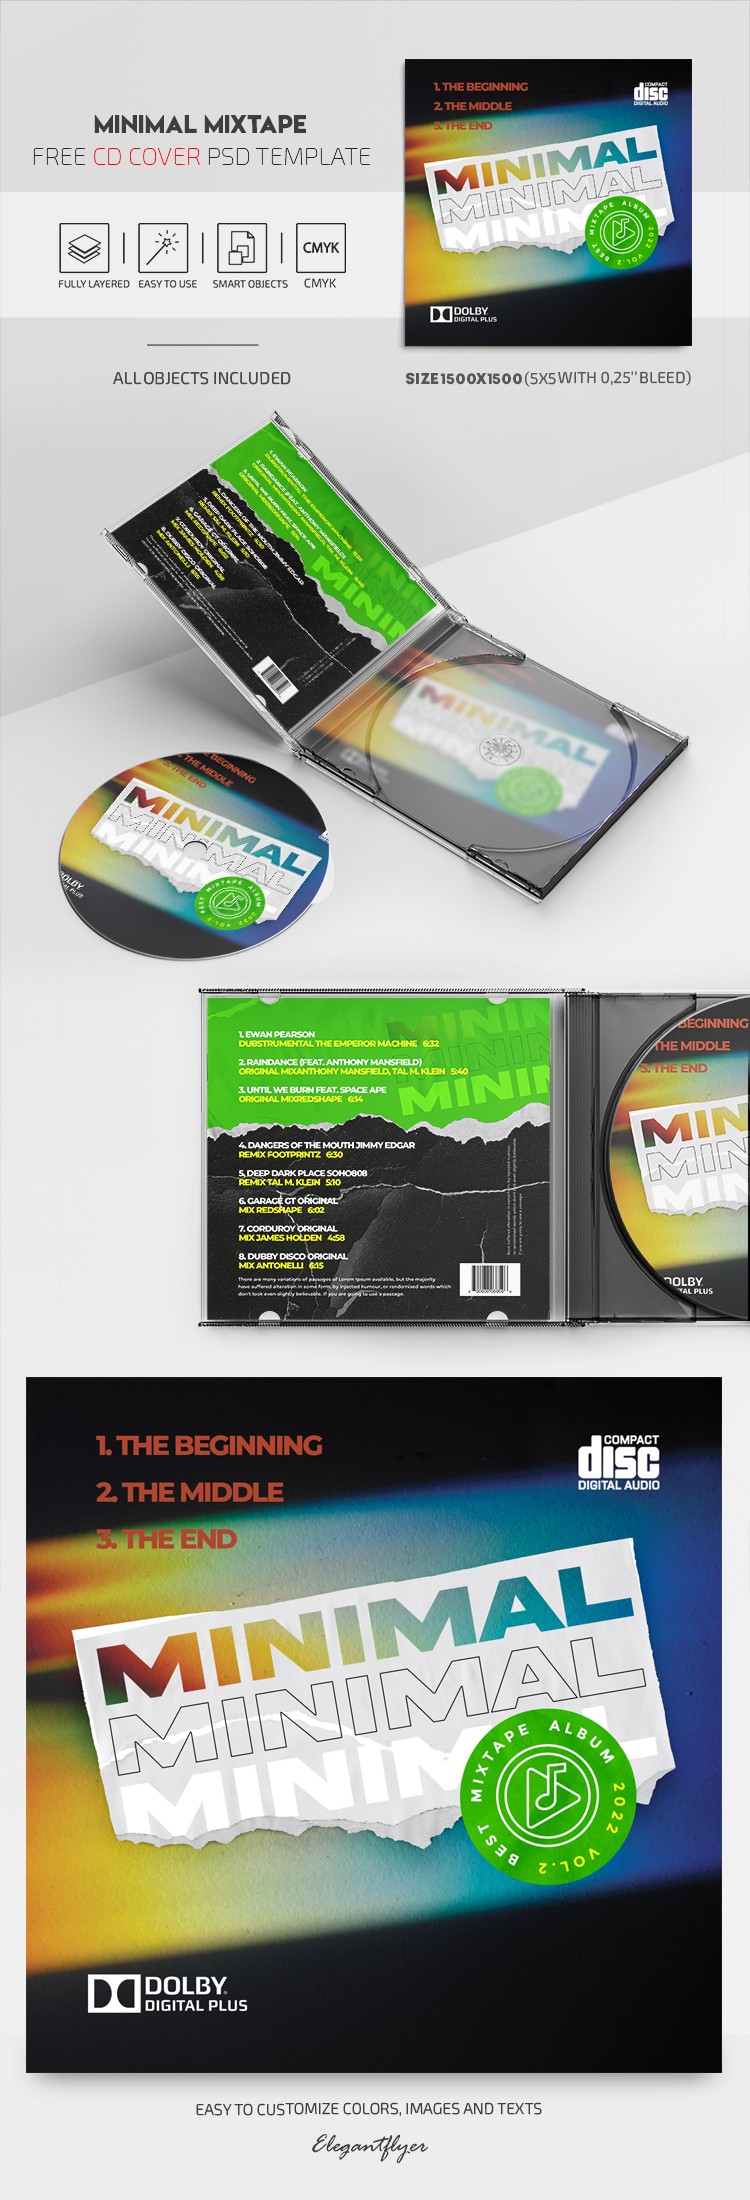 Capa do CD da Mixtape Minimal. by ElegantFlyer